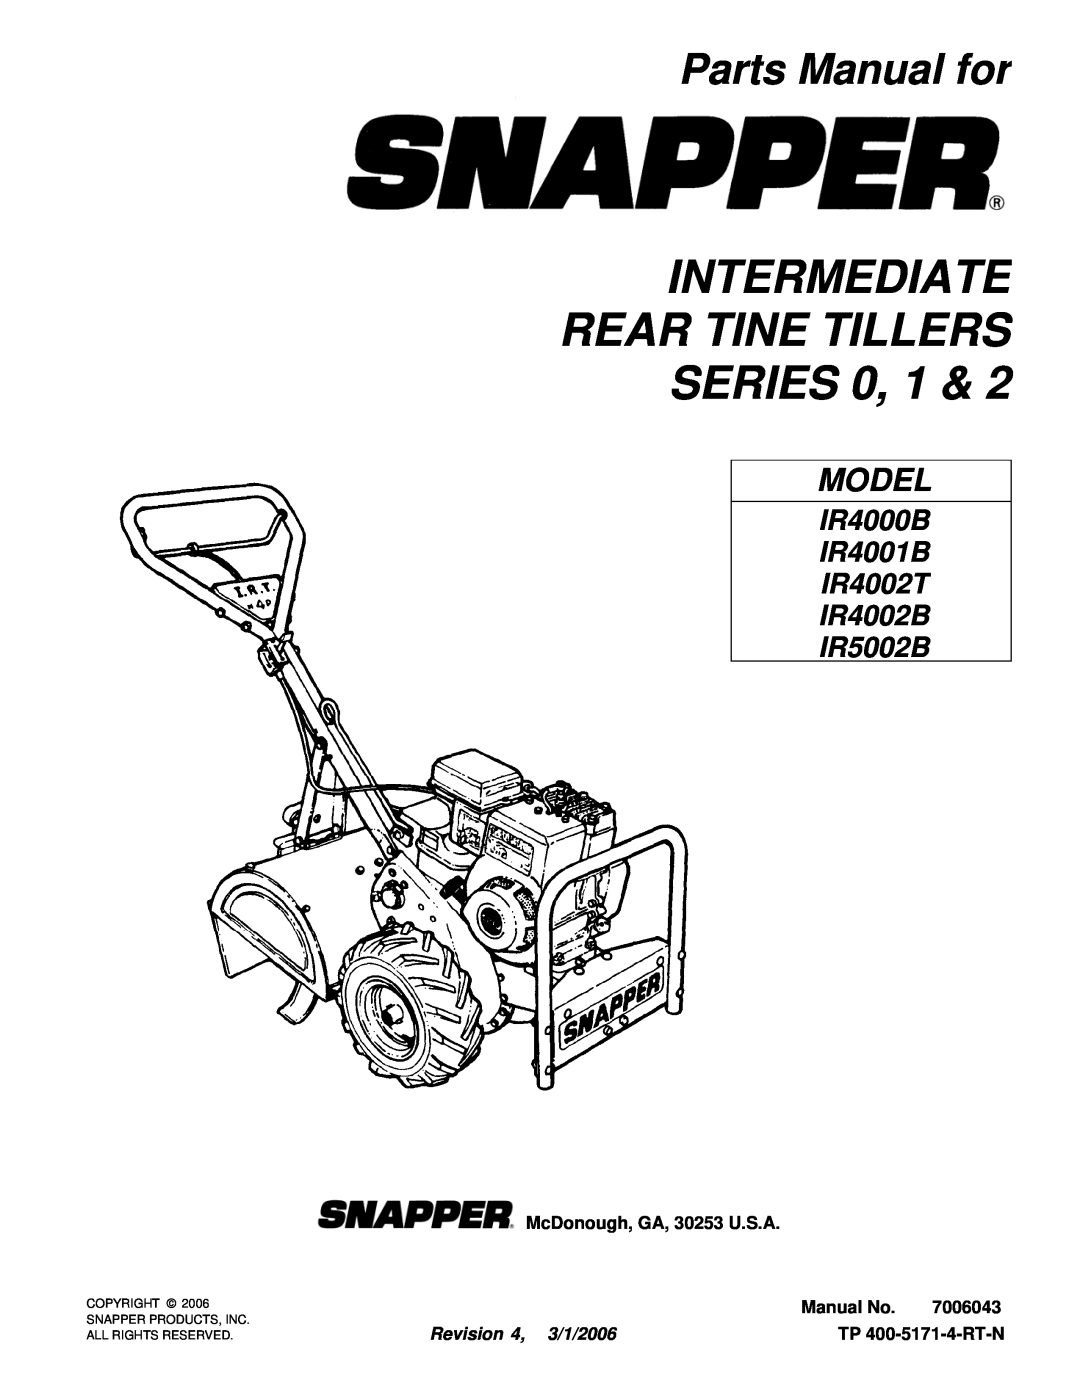 Snapper IR4001B manual INTERMEDIATE REAR TINE TILLERS SERIES 0, 1, Parts Manual for, McDonough, GA, 30253 U.S.A, Manual No 